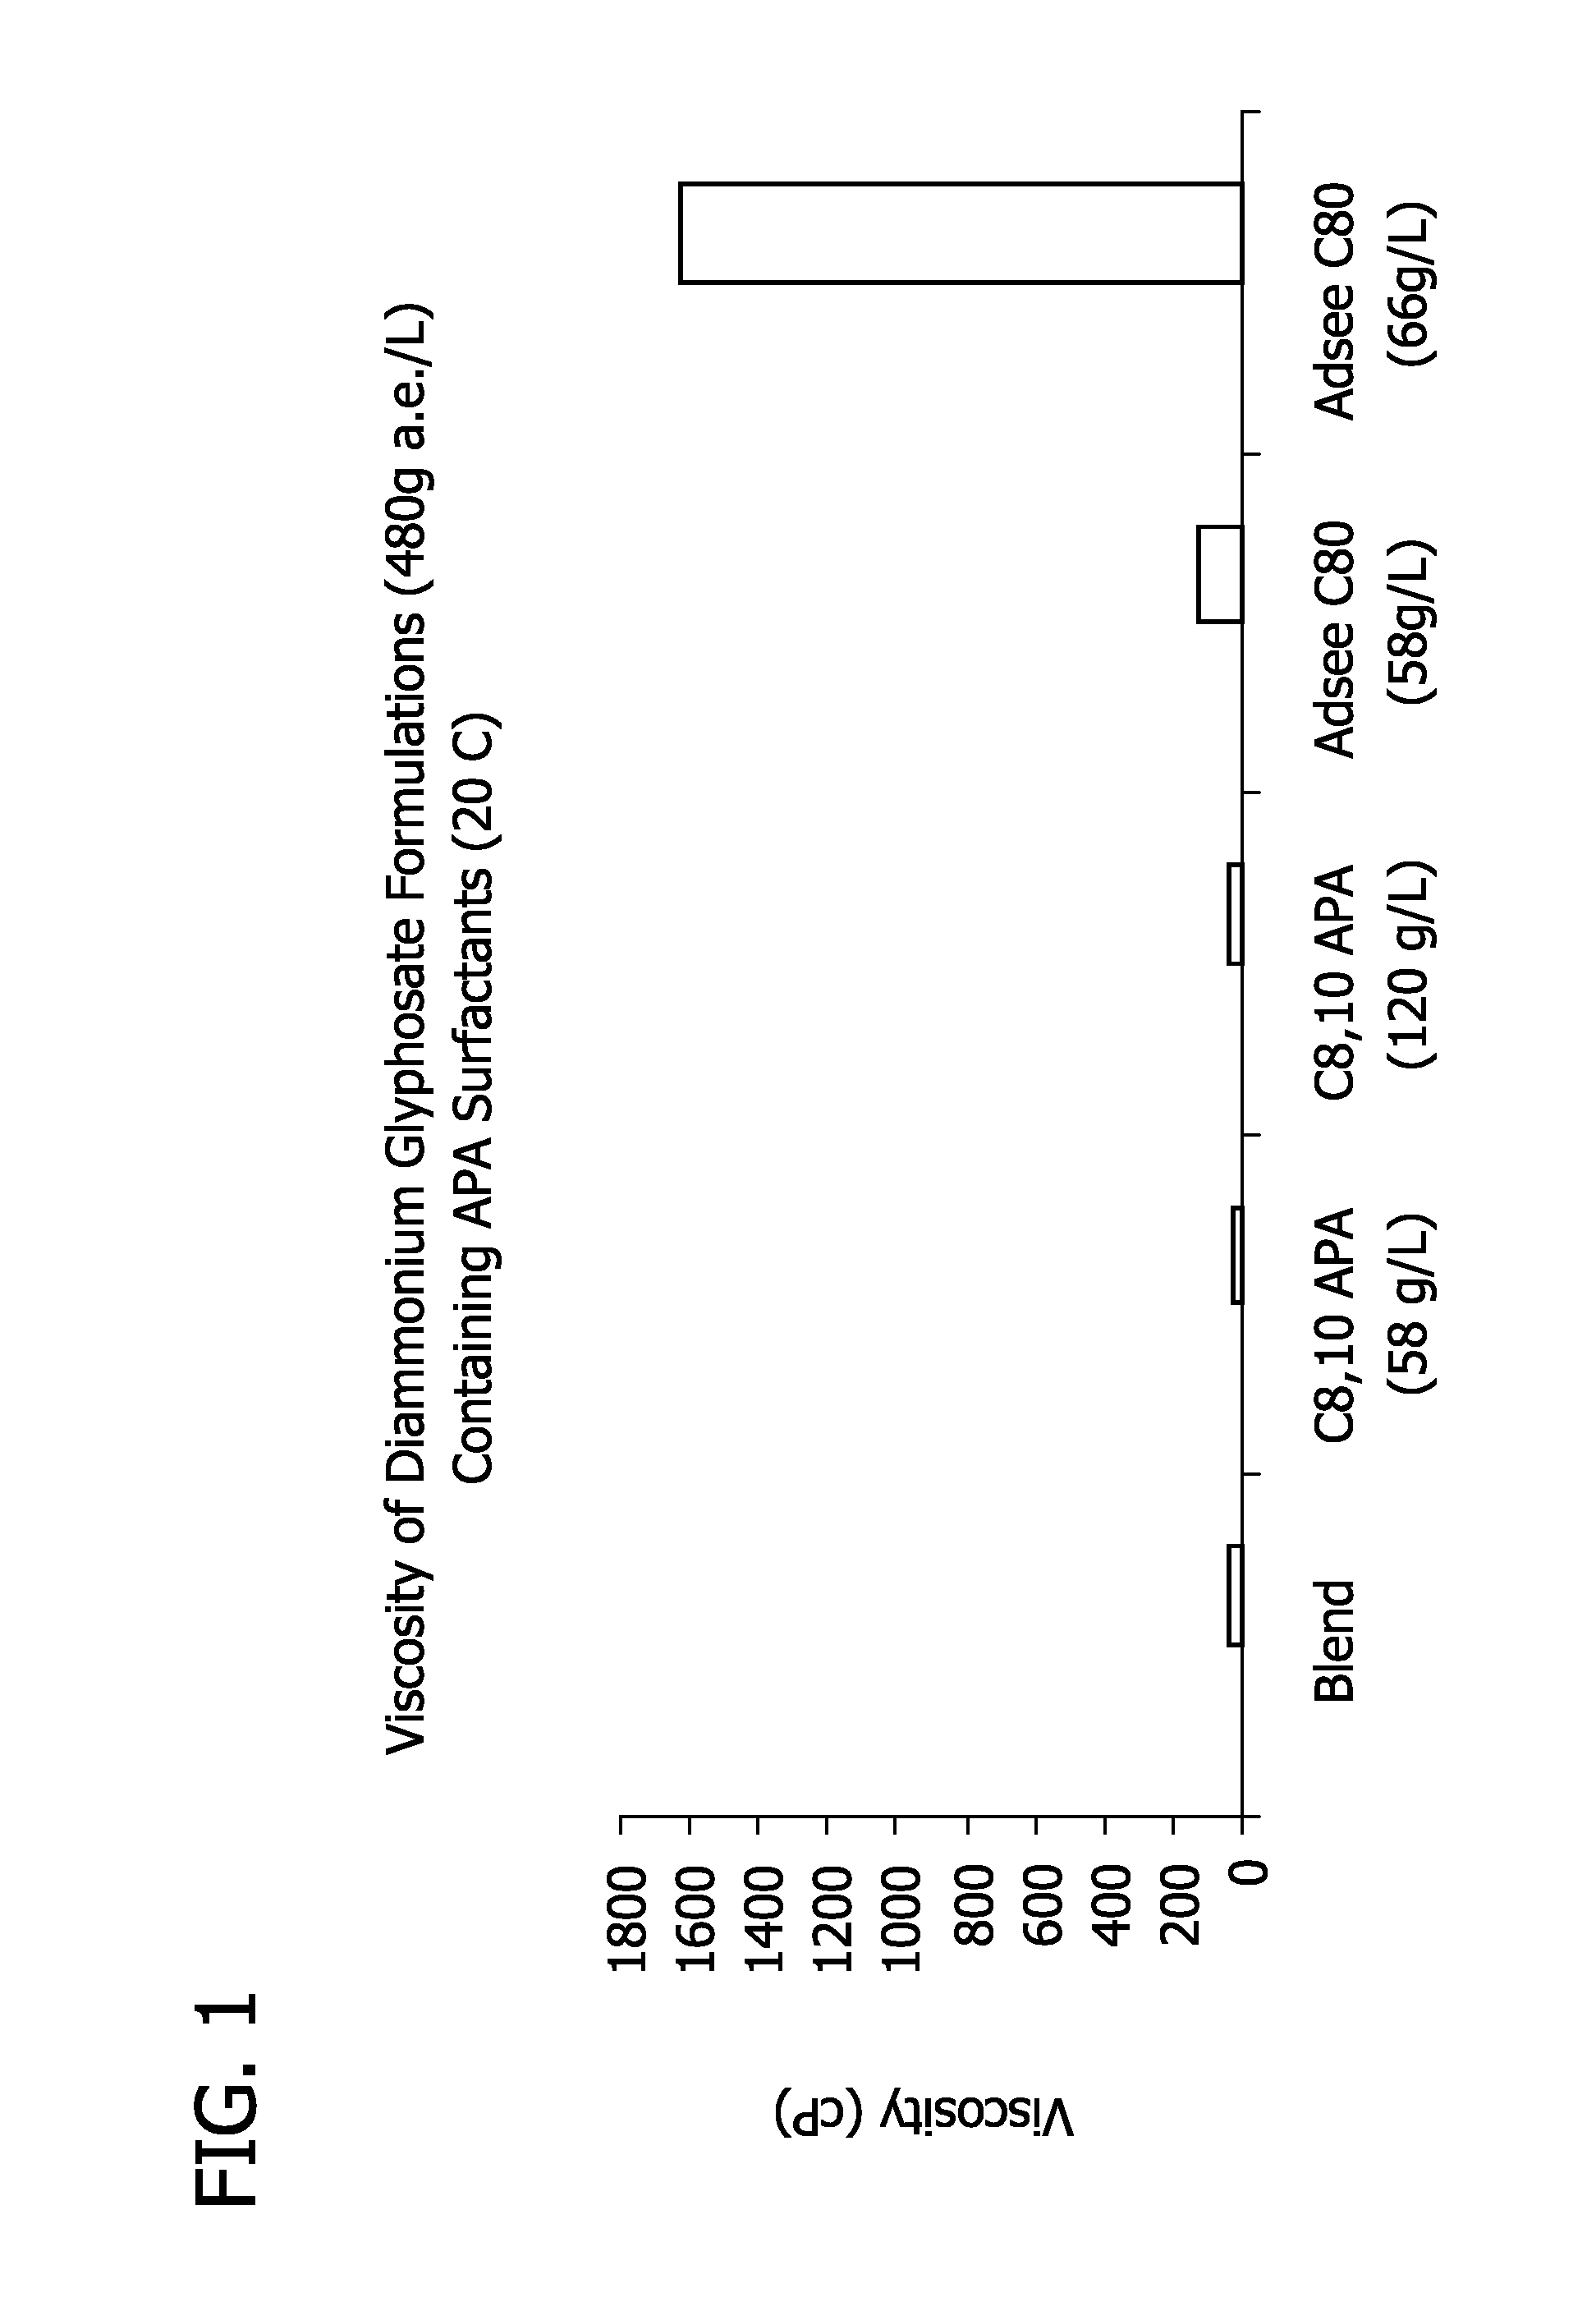 Glyphosate formulations containing amidoalkylamine surfactants